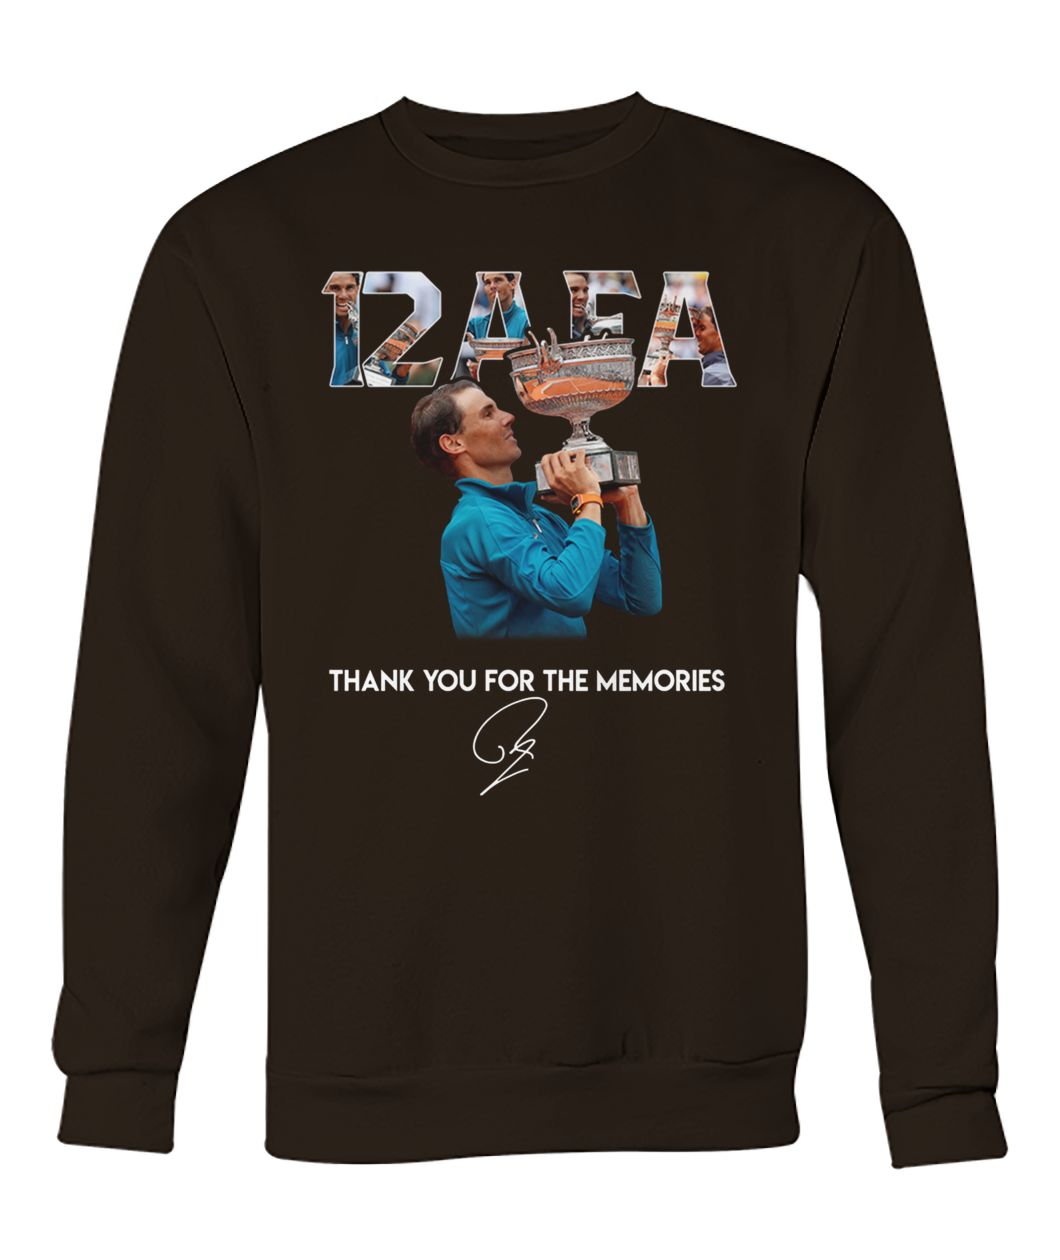 12 afa roland garros thank you for the memories signature crew neck sweatshirt